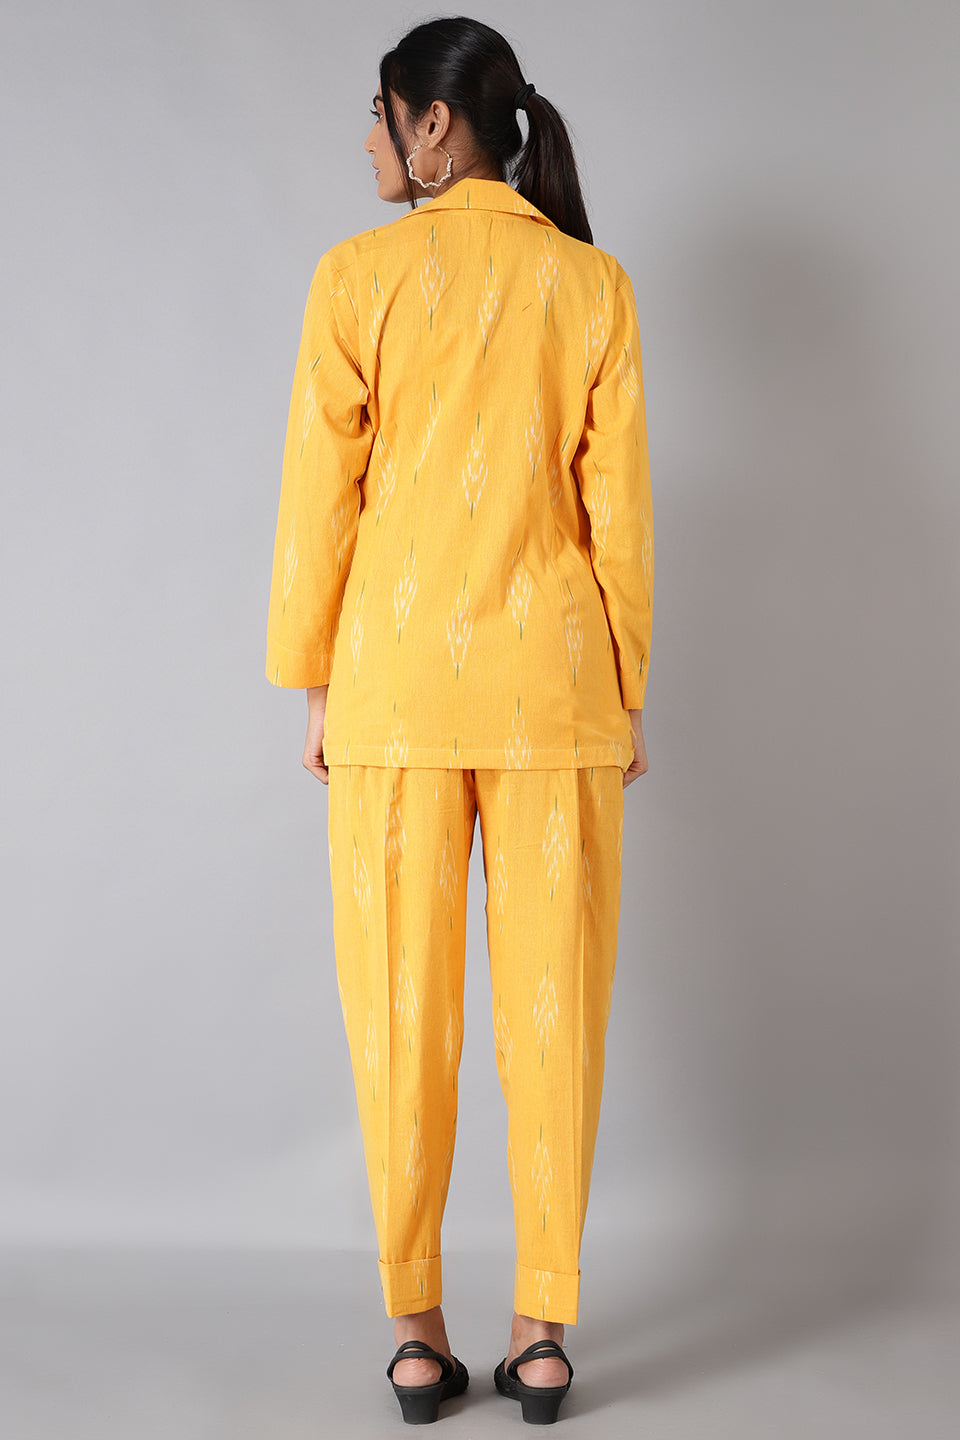 Ikat Yellow 3Pcs Dress